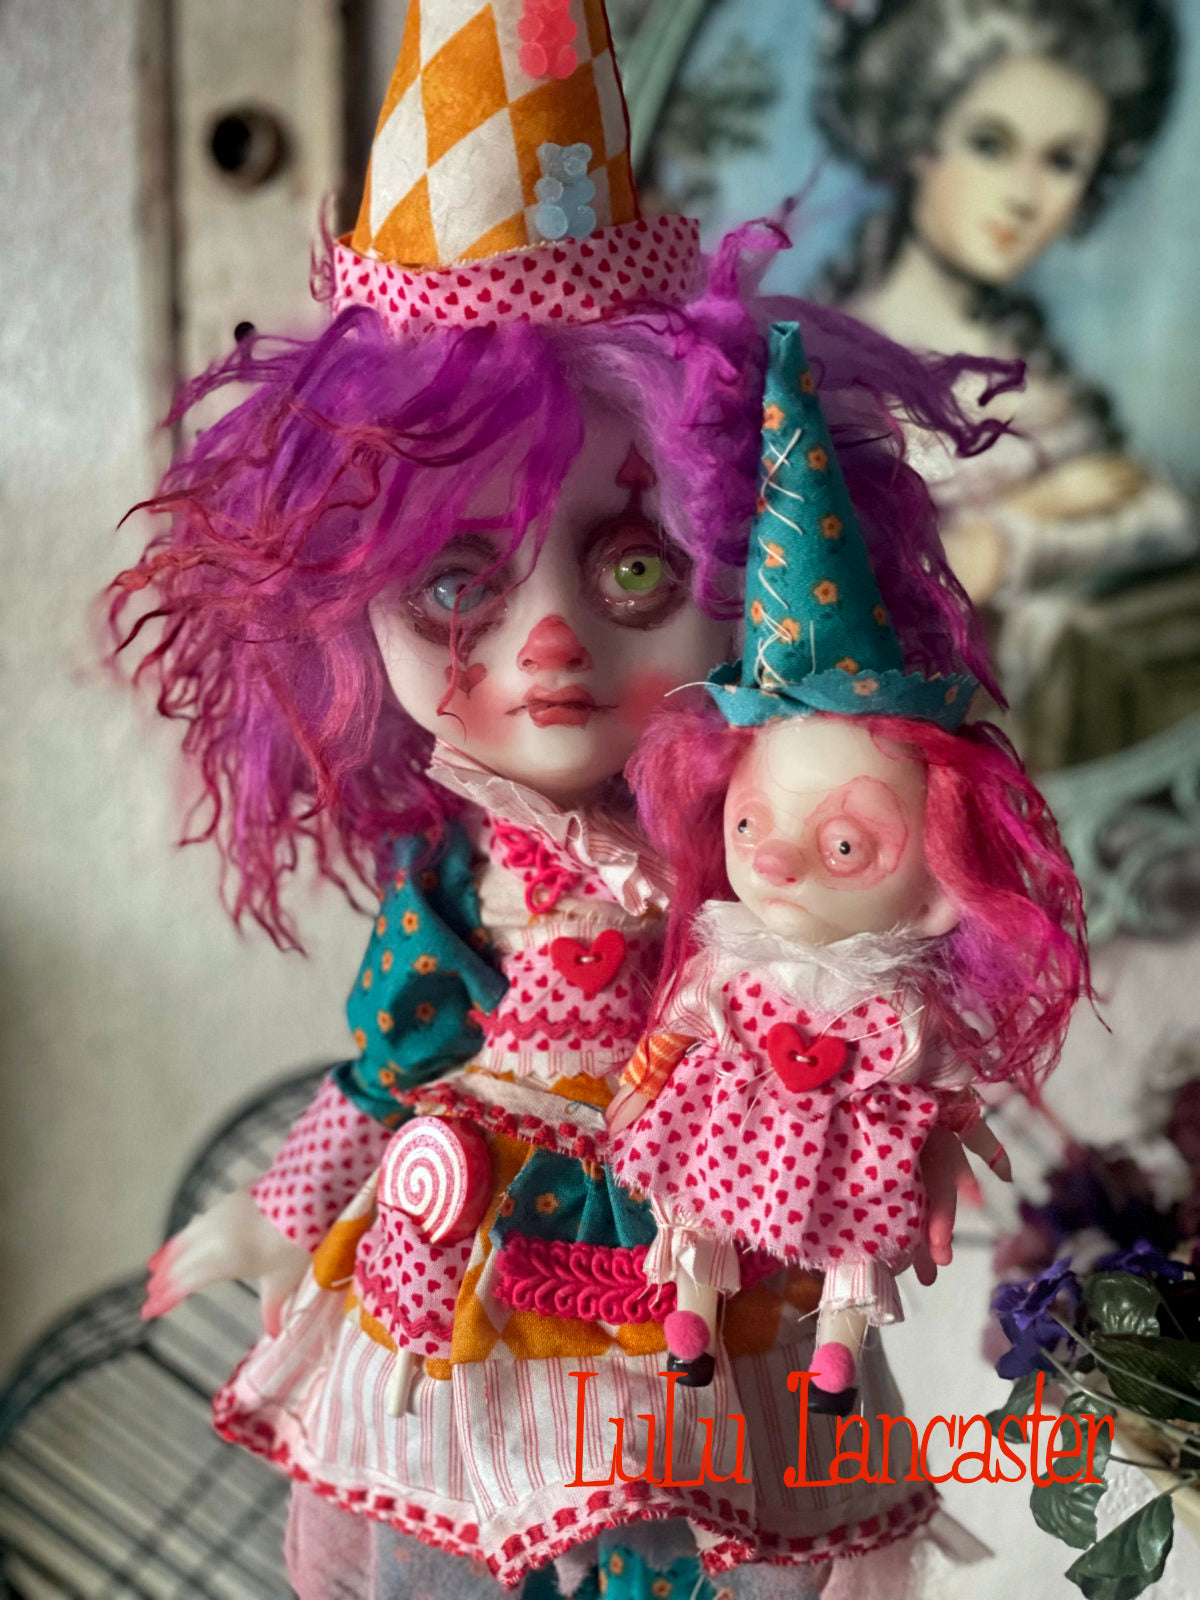 Rouge PoP Poupee the clown Original LuLu Lancaster Art Doll